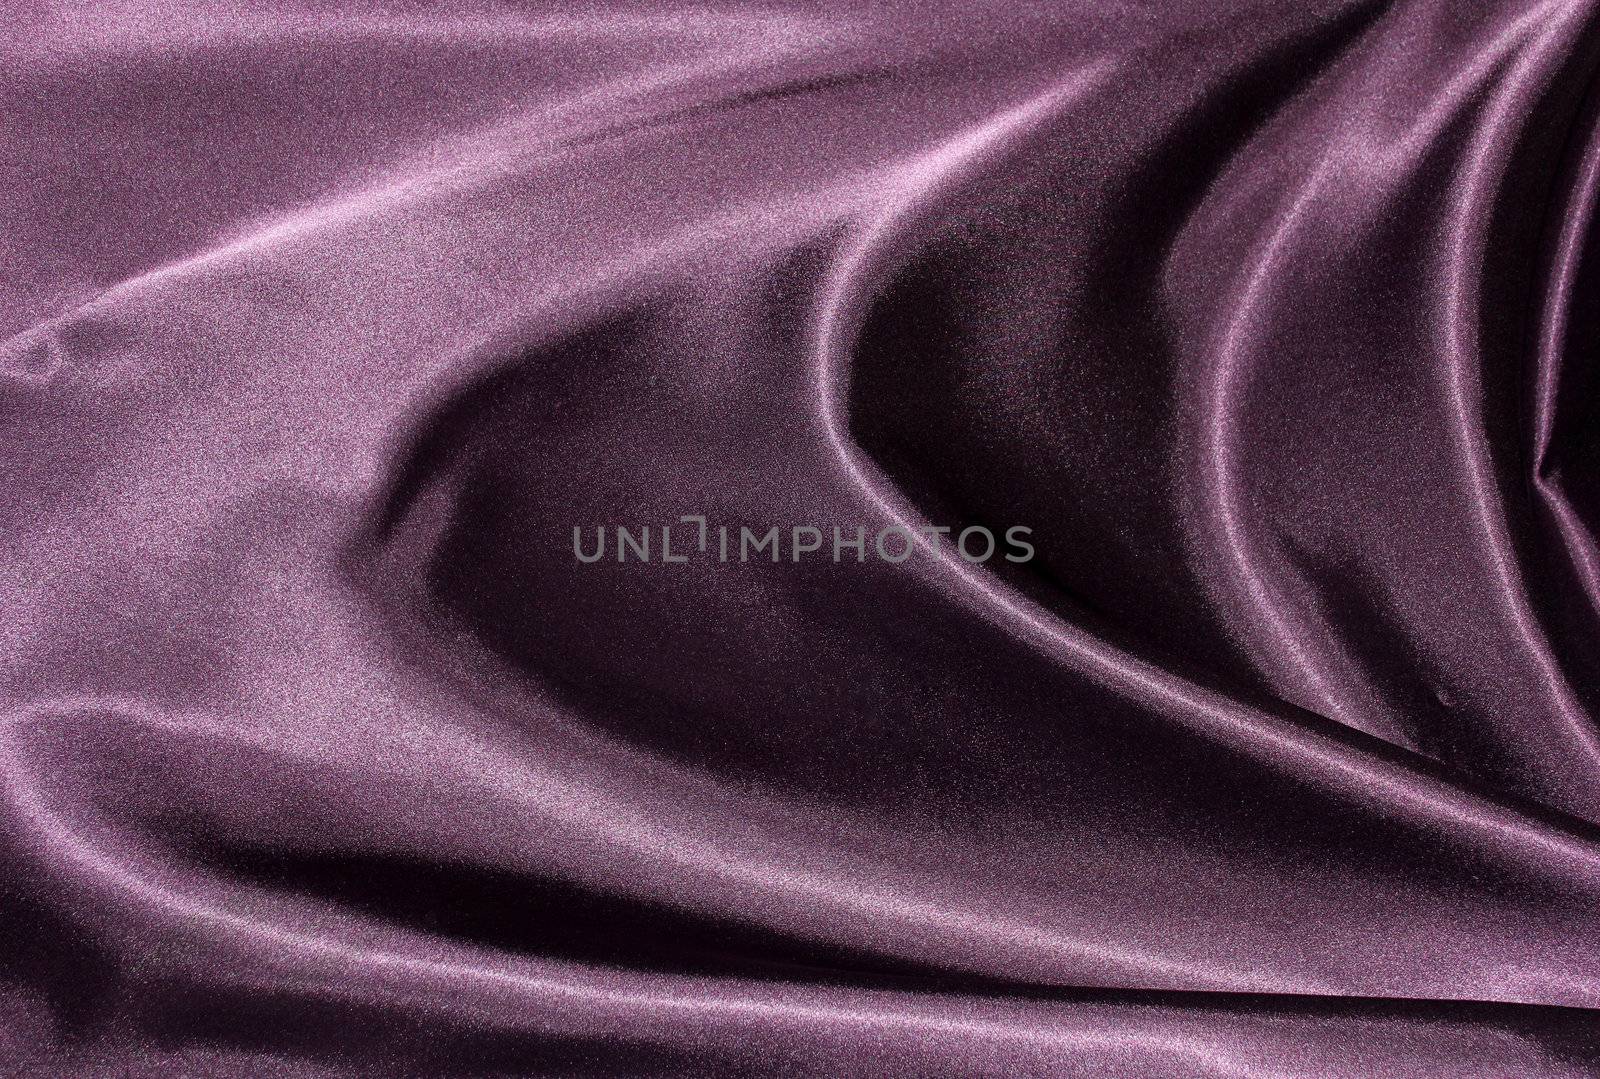 undulating folds of the dress of dark purple silk